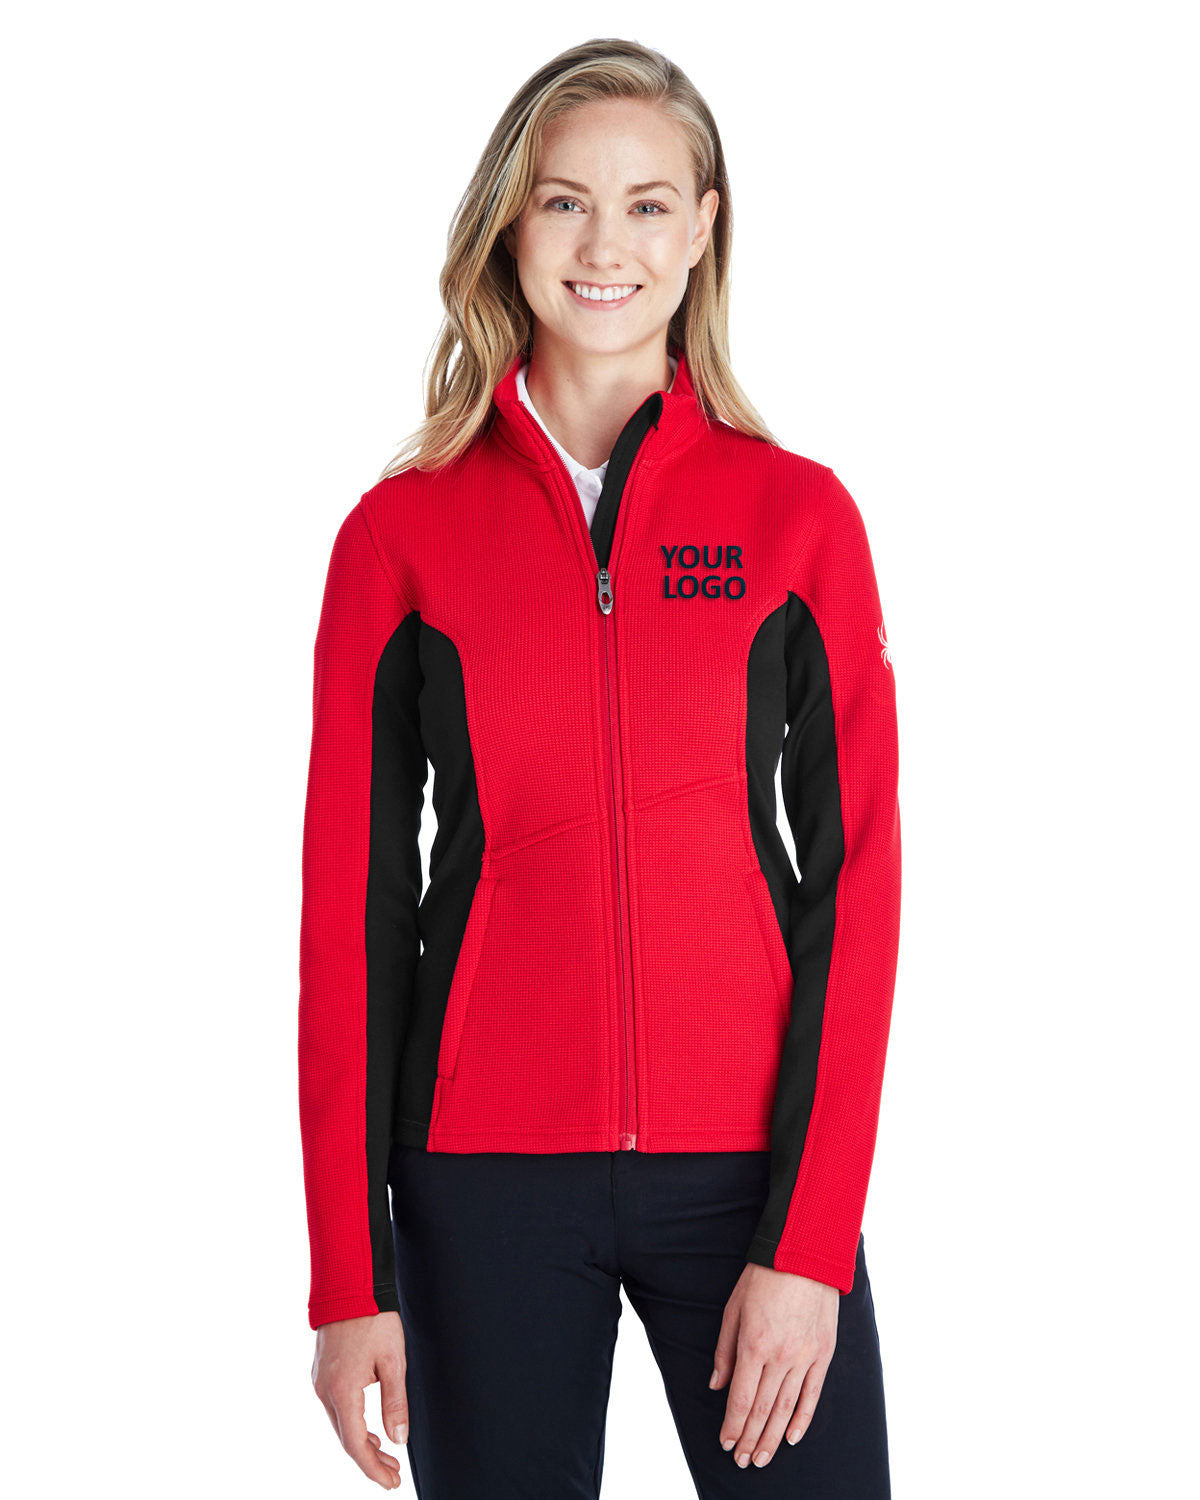 Spyder RED/ BLACK/ WHT 187335 jacket company logo